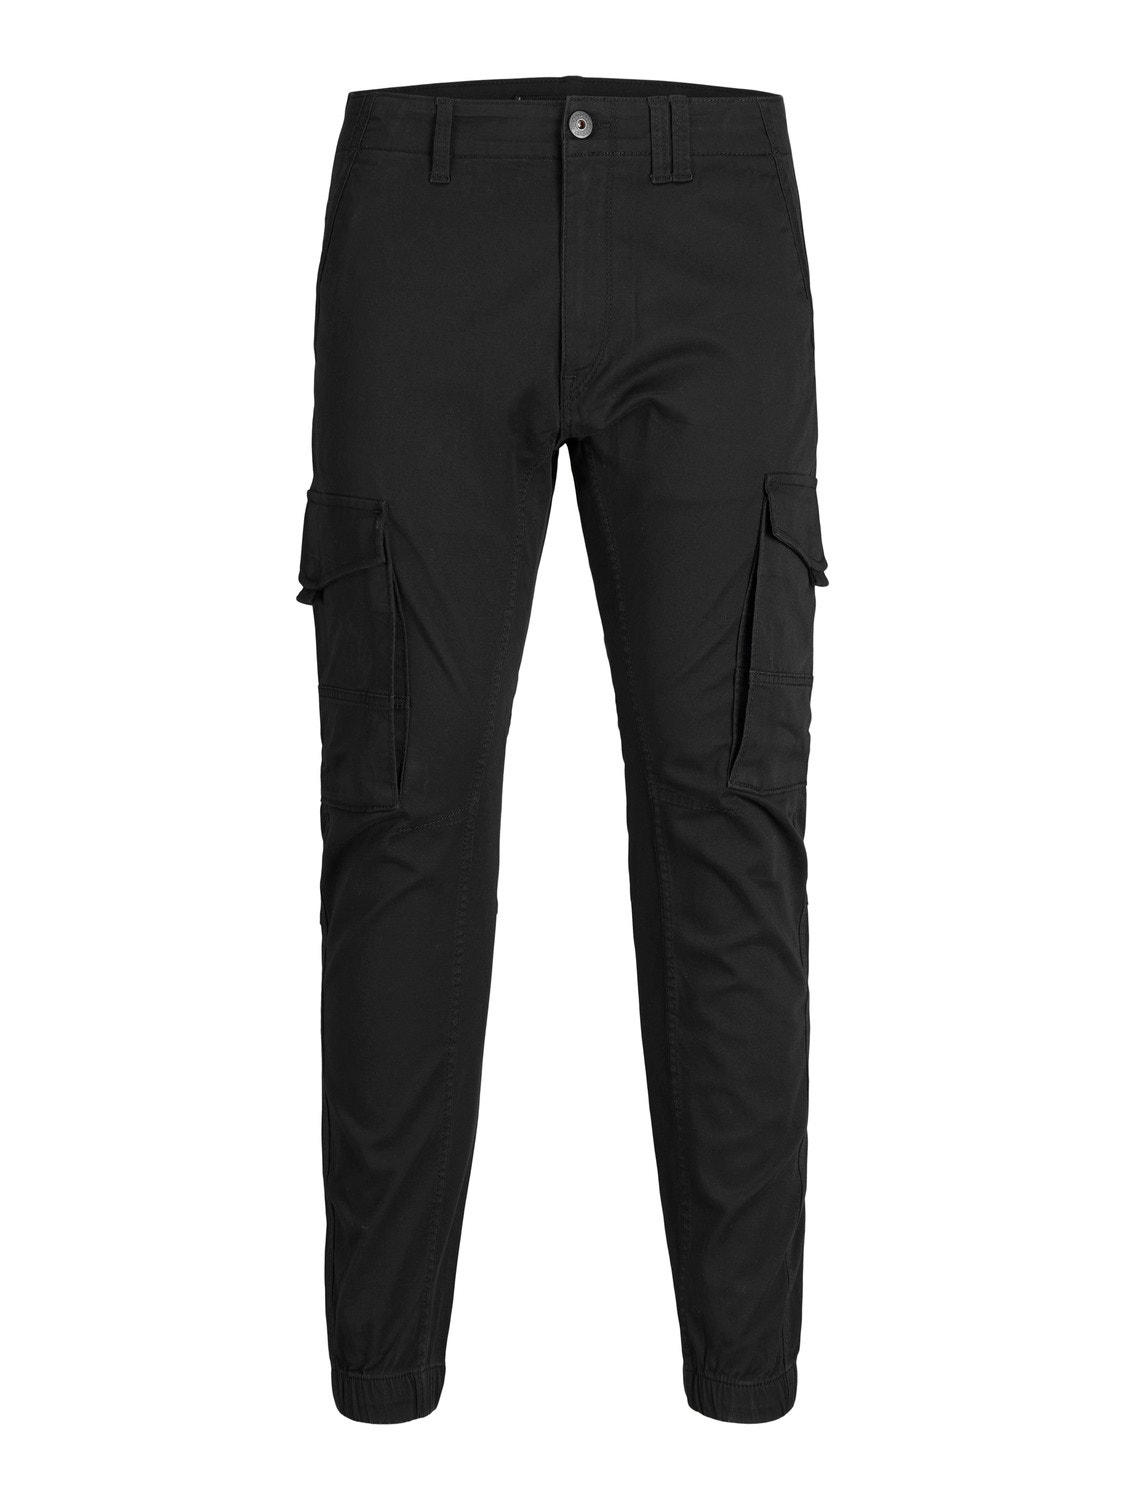 Jack & Jones Slim Fit Cargo trousers -Black - 12139912